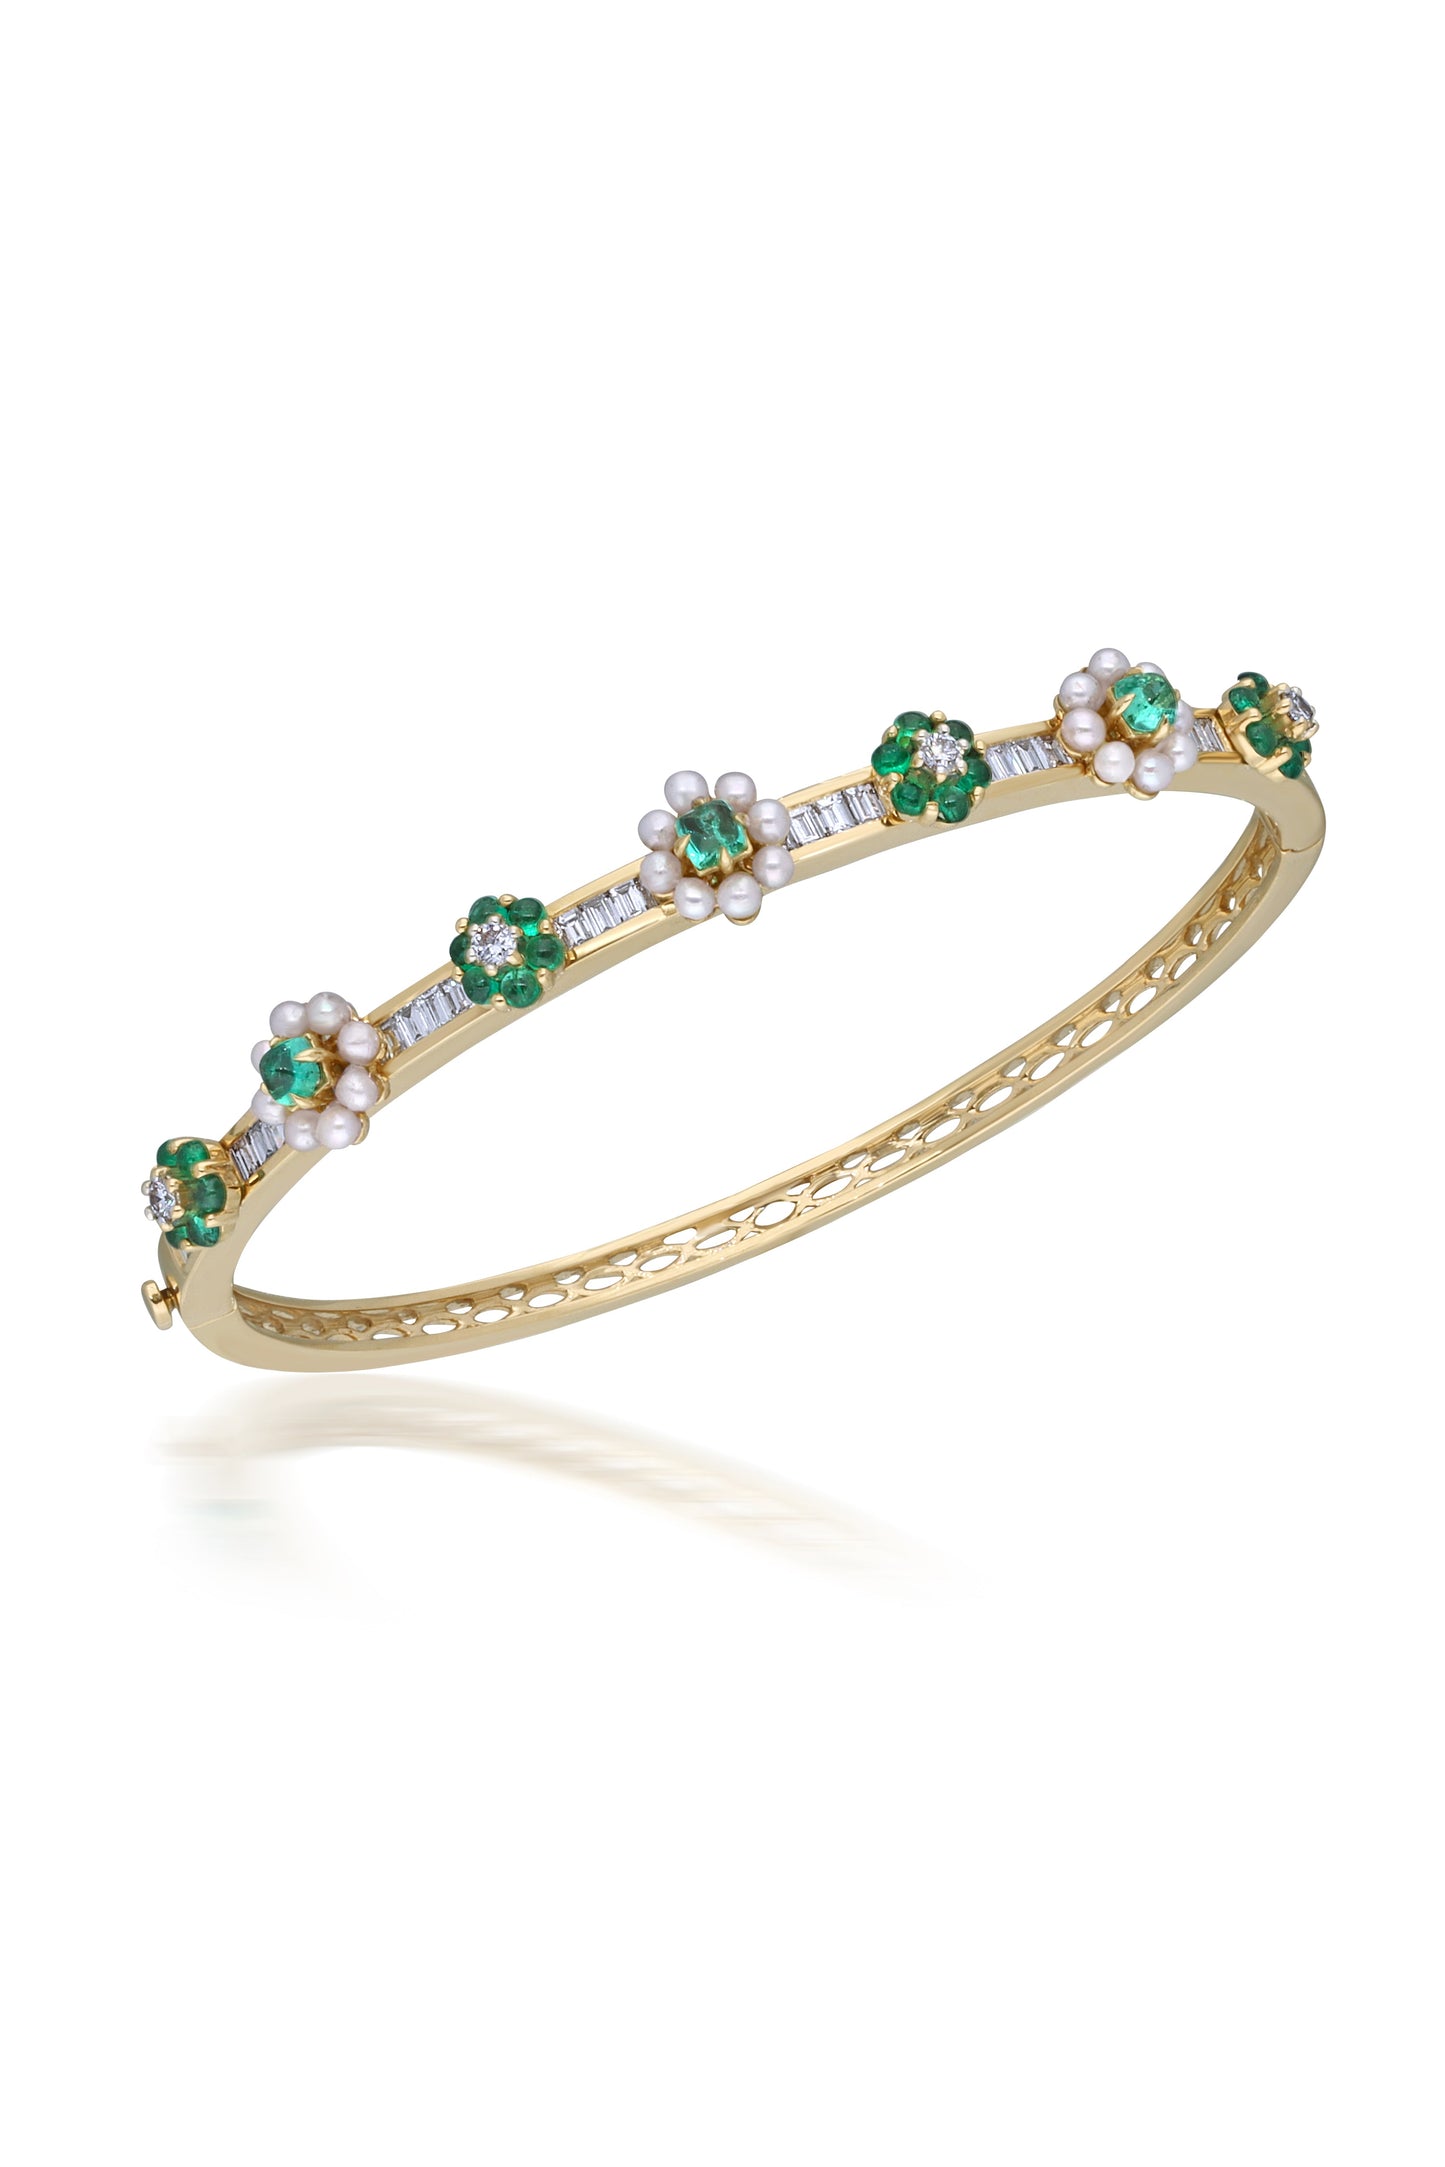 MOKSH-Paro Emerald Bracelet-YLWGLD